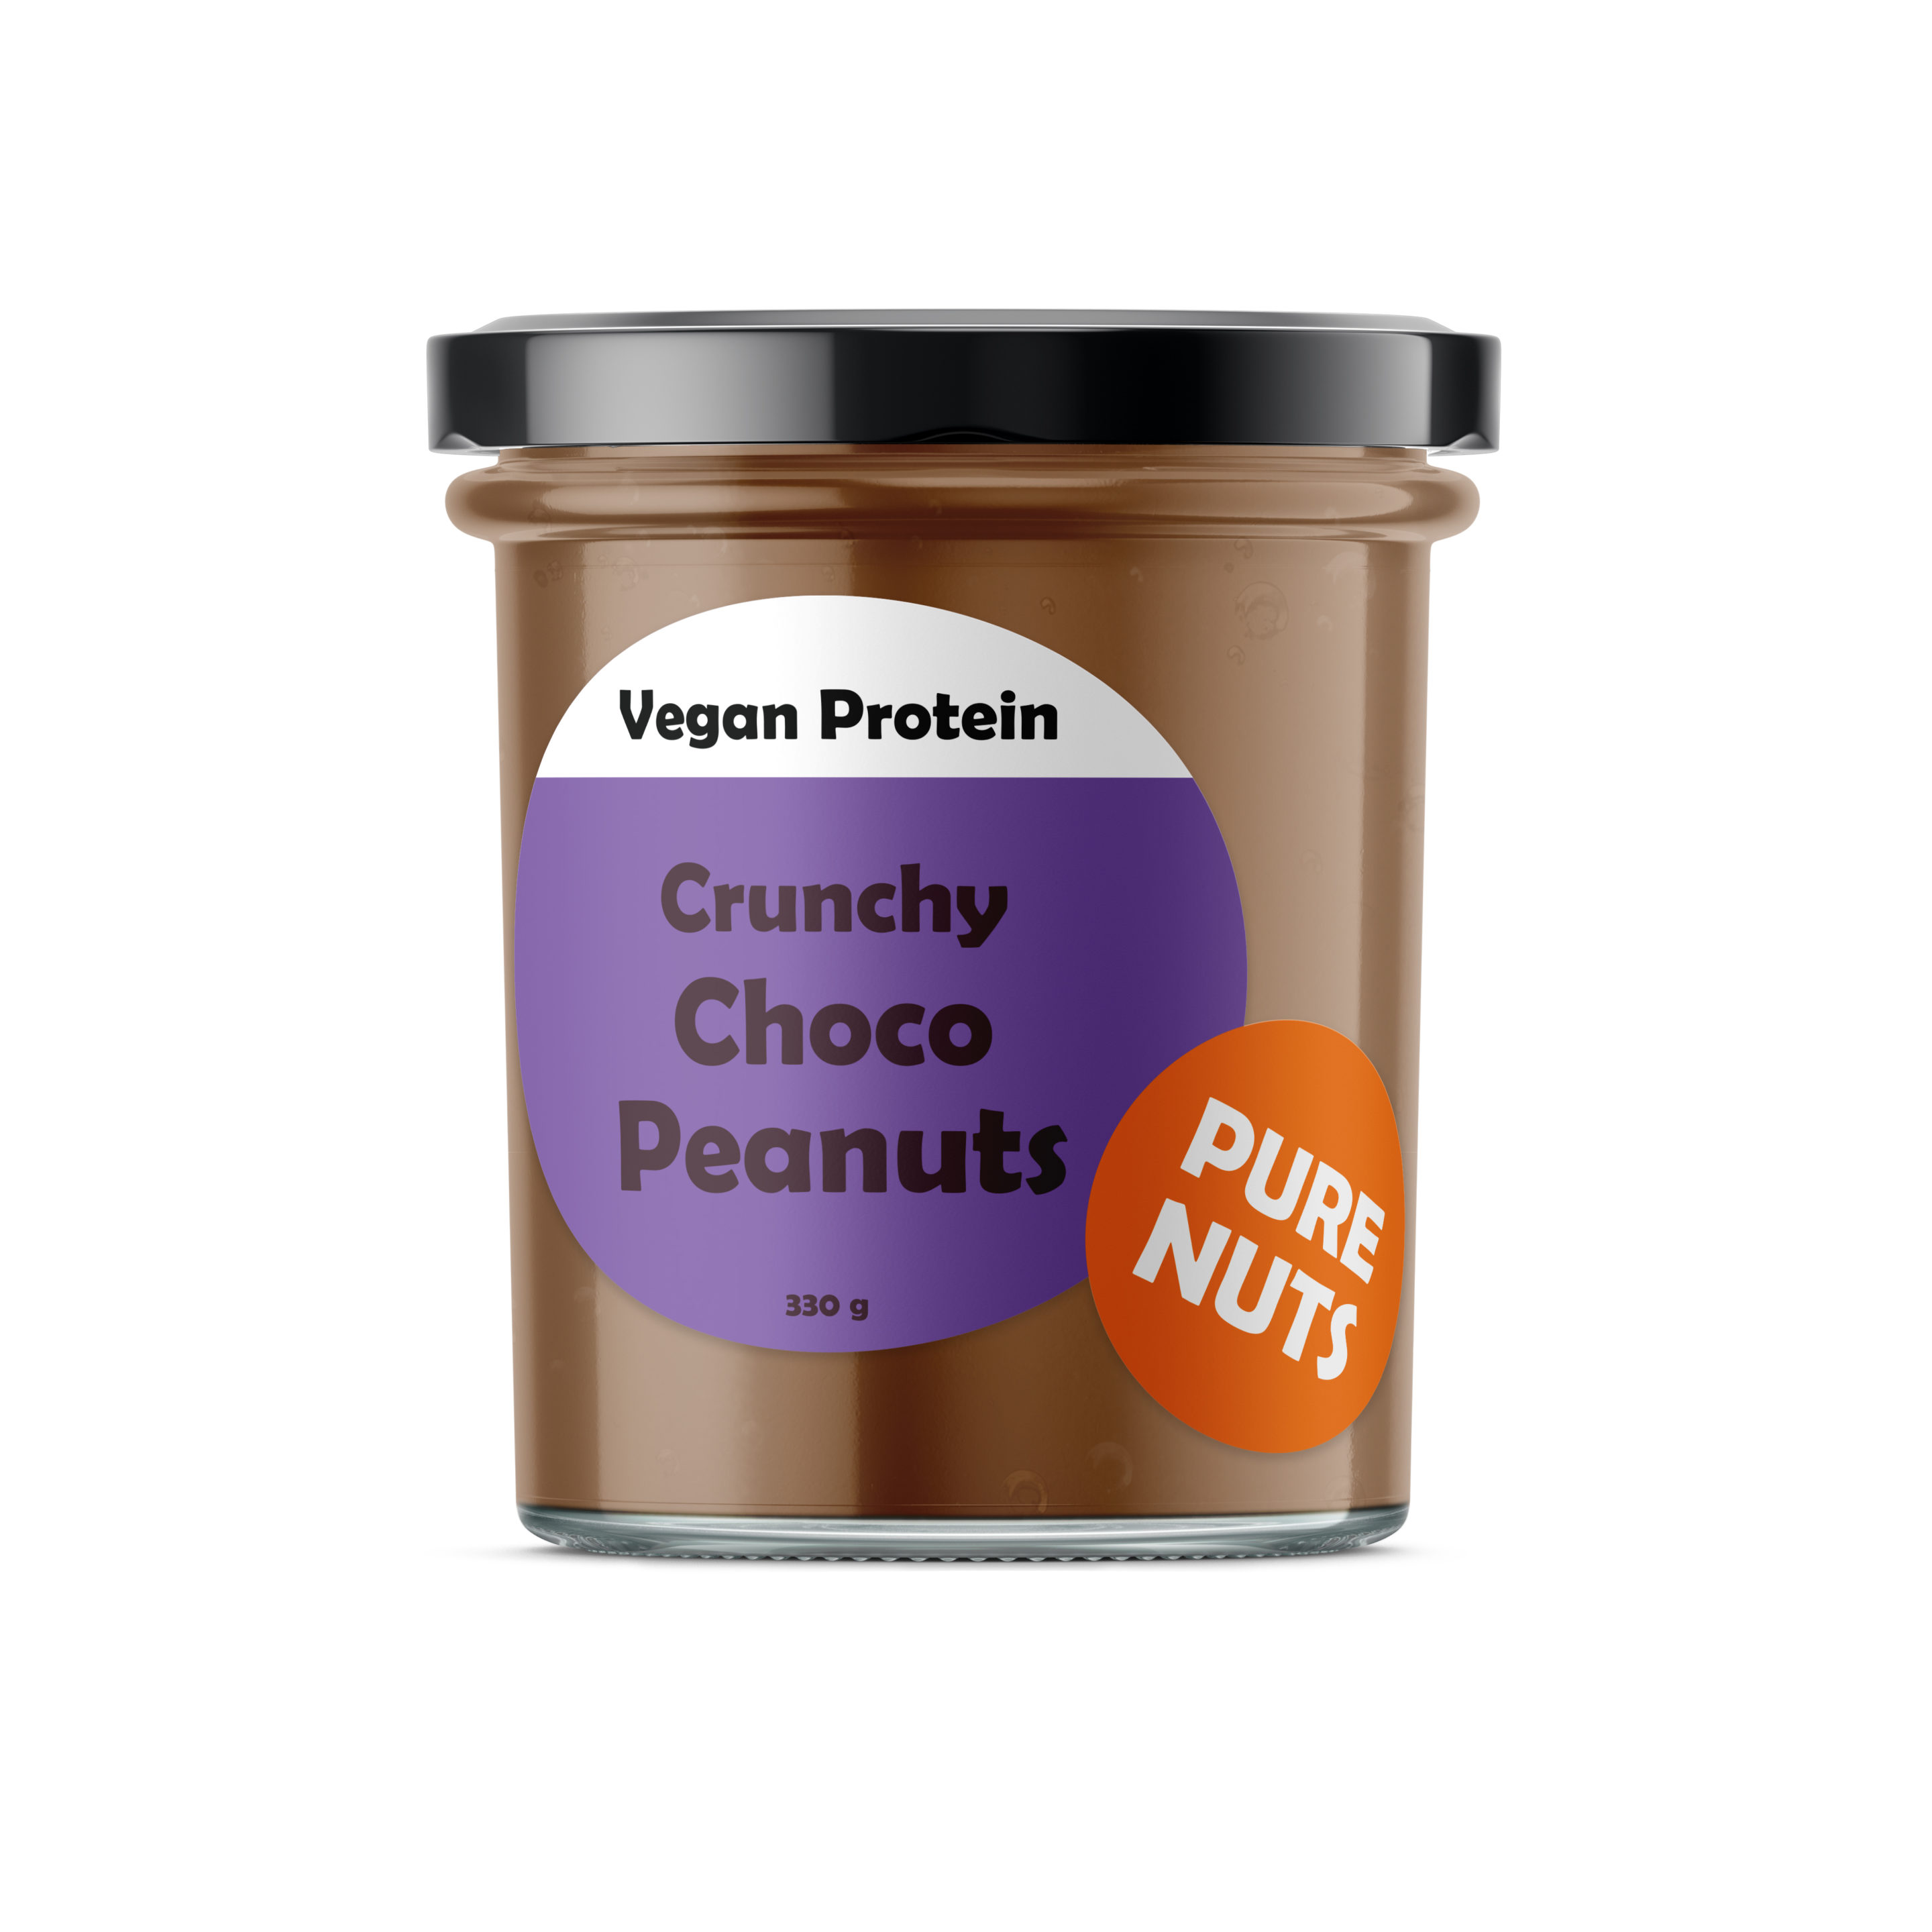 VEGAN PROTEIN Crunchy Choco Peanuts